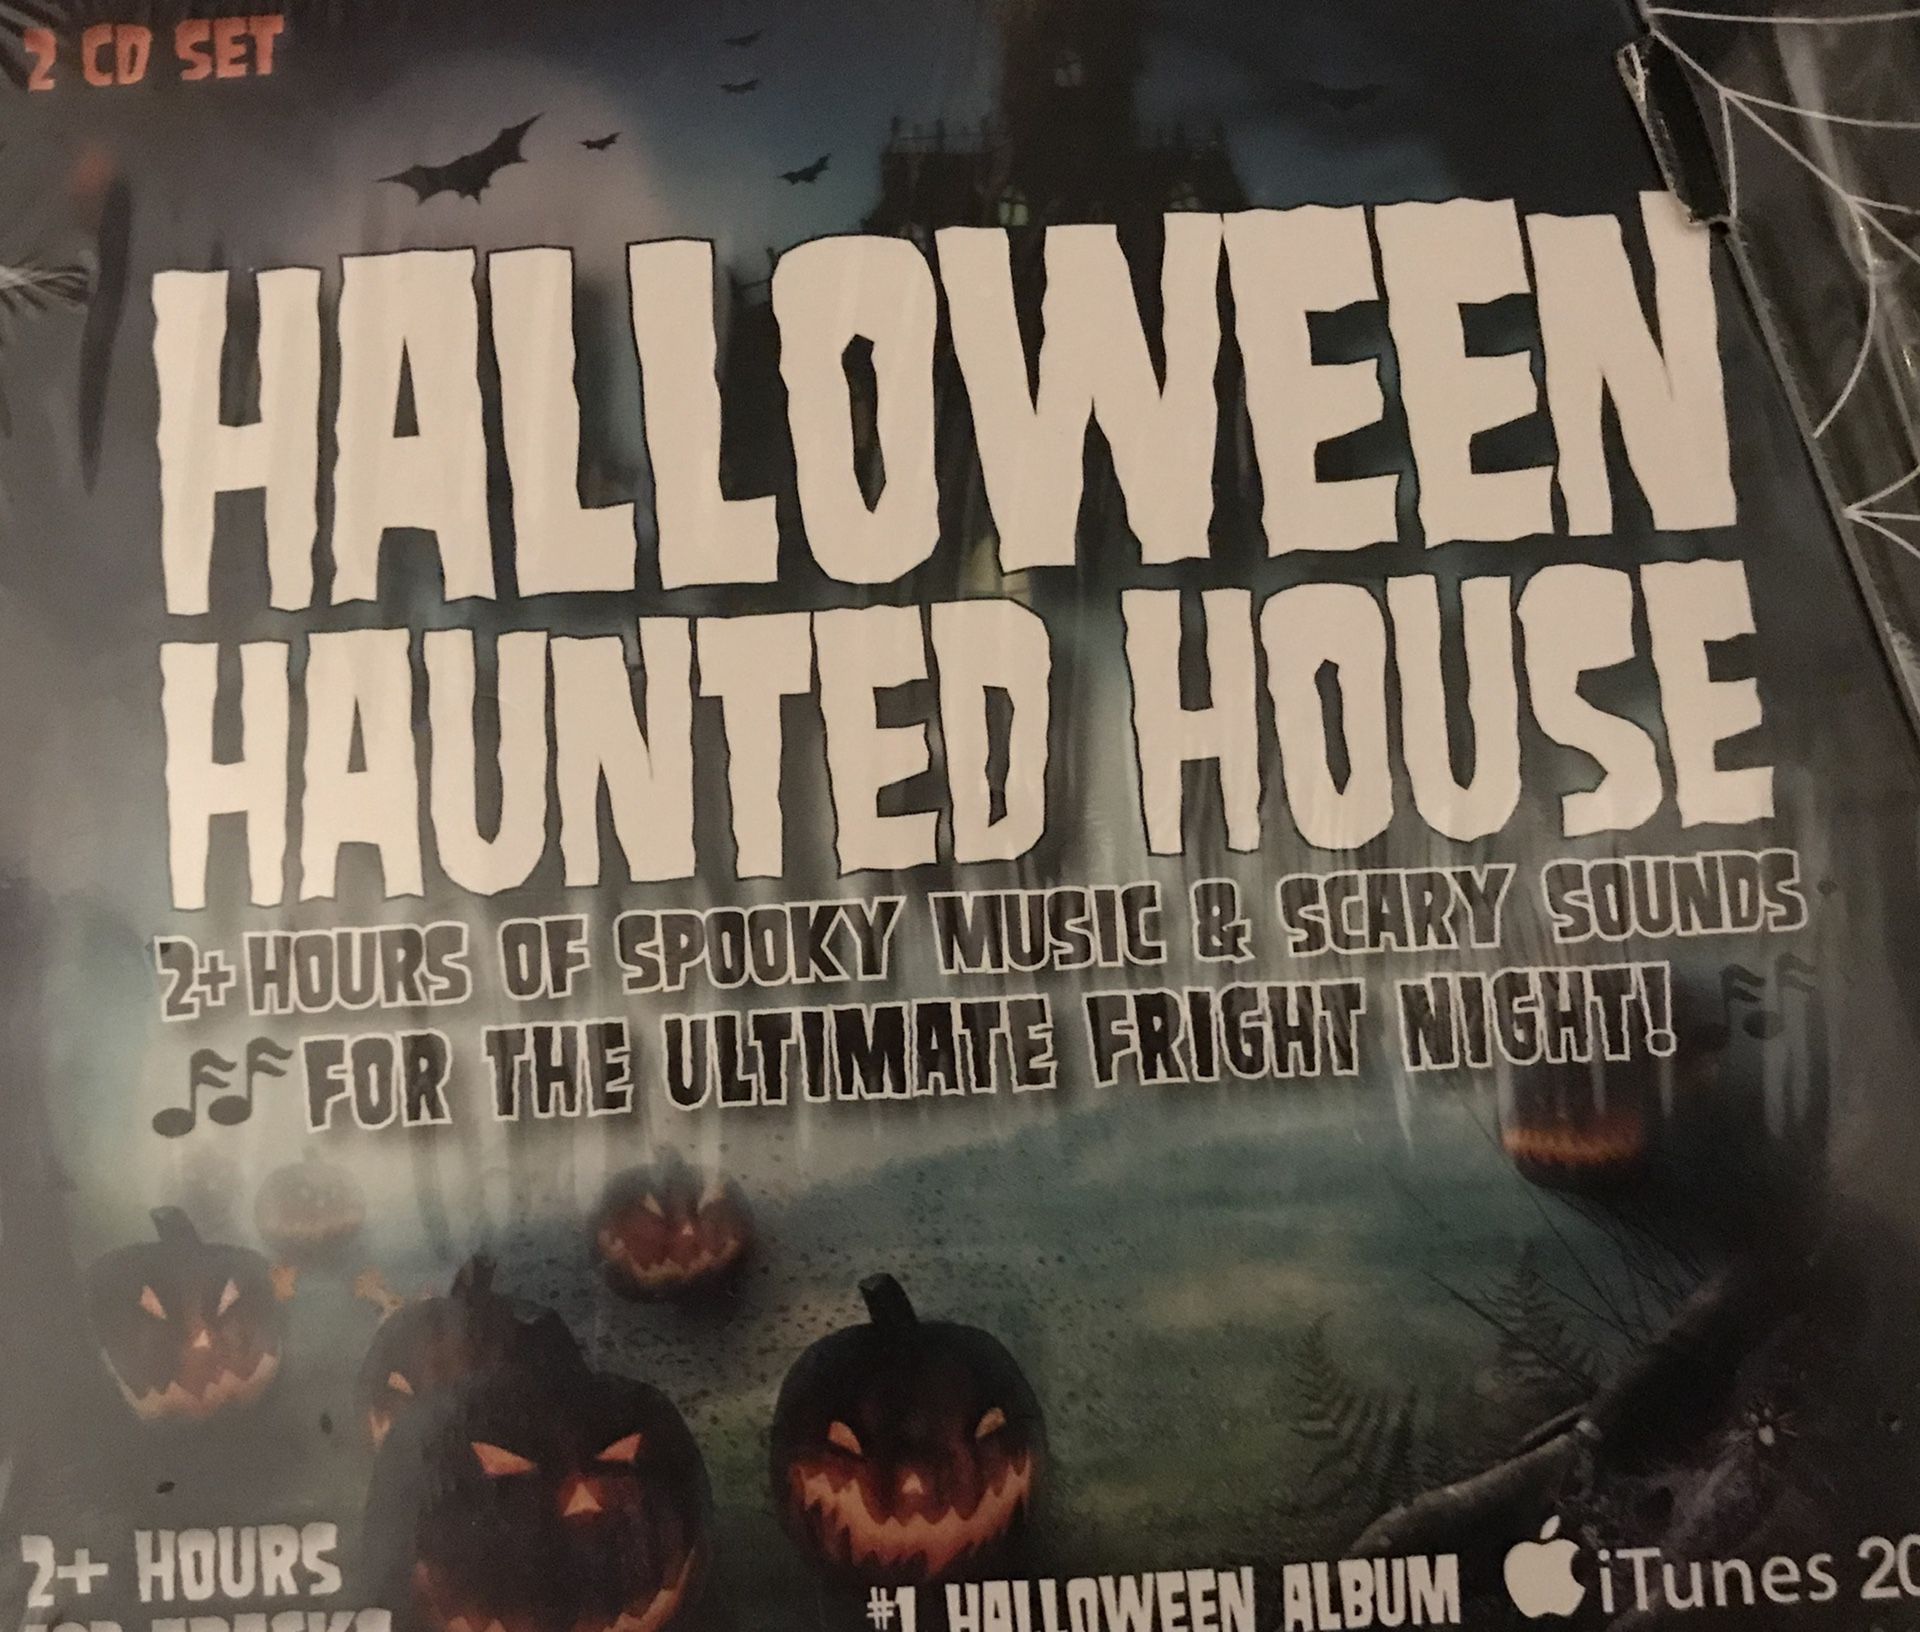 Halloween Haunted House 2 CD Set